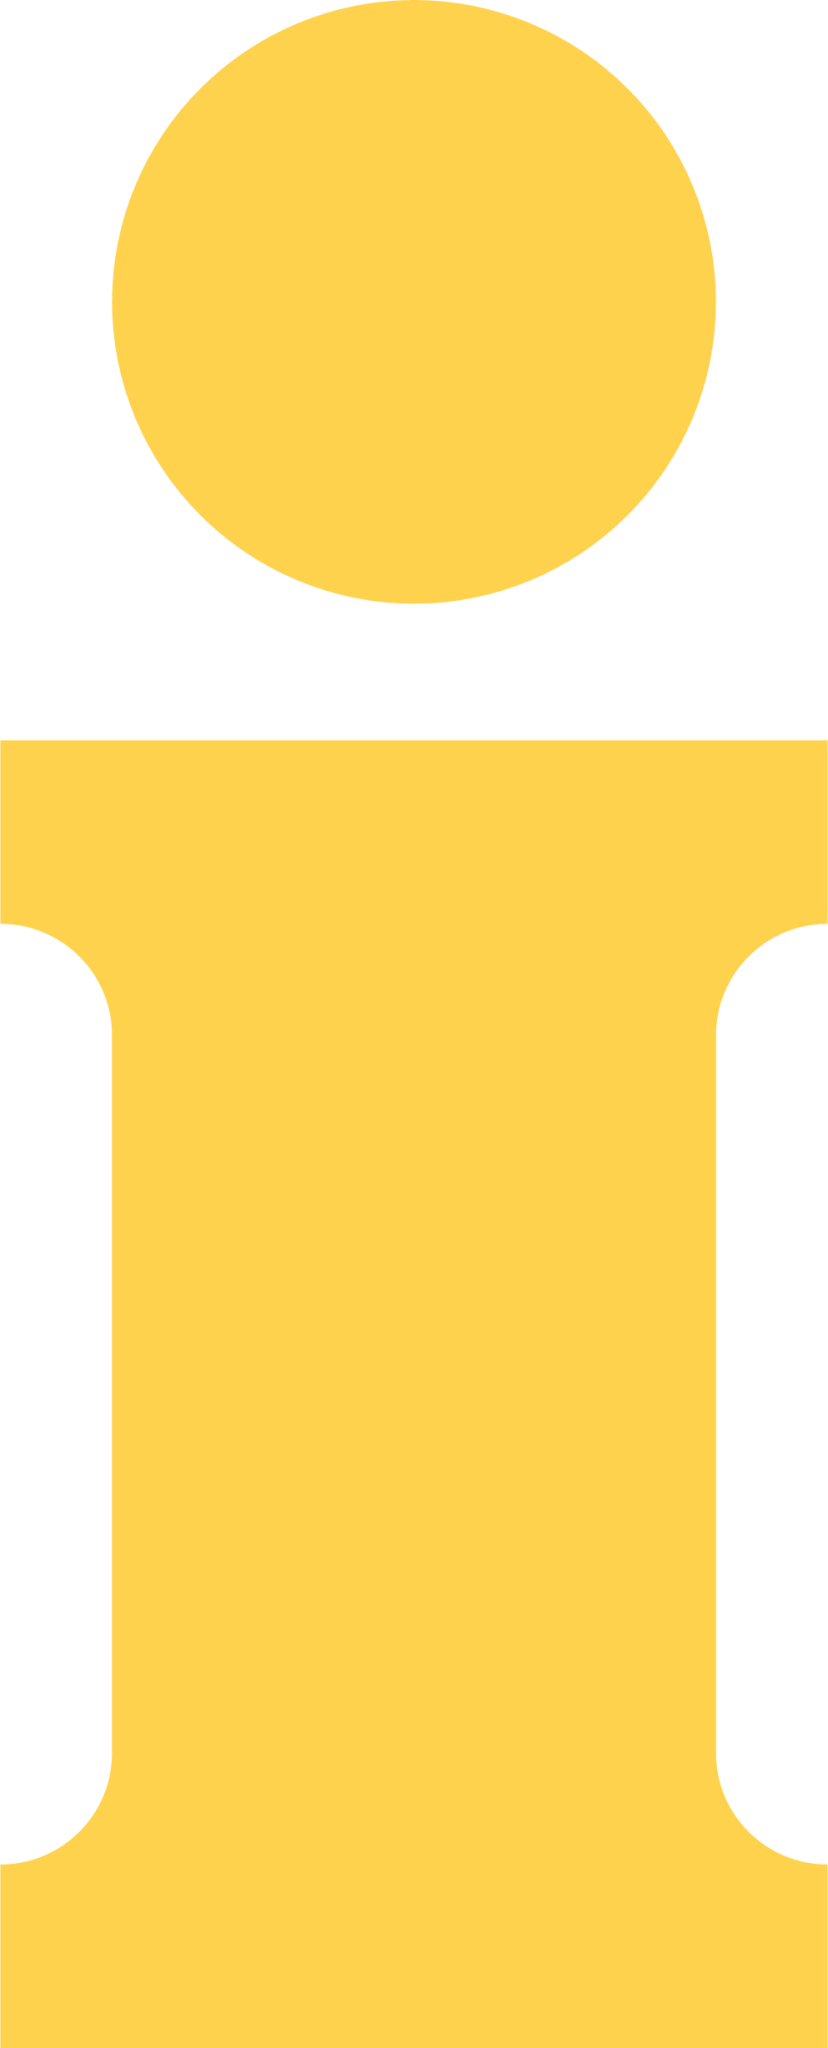 letter i icon